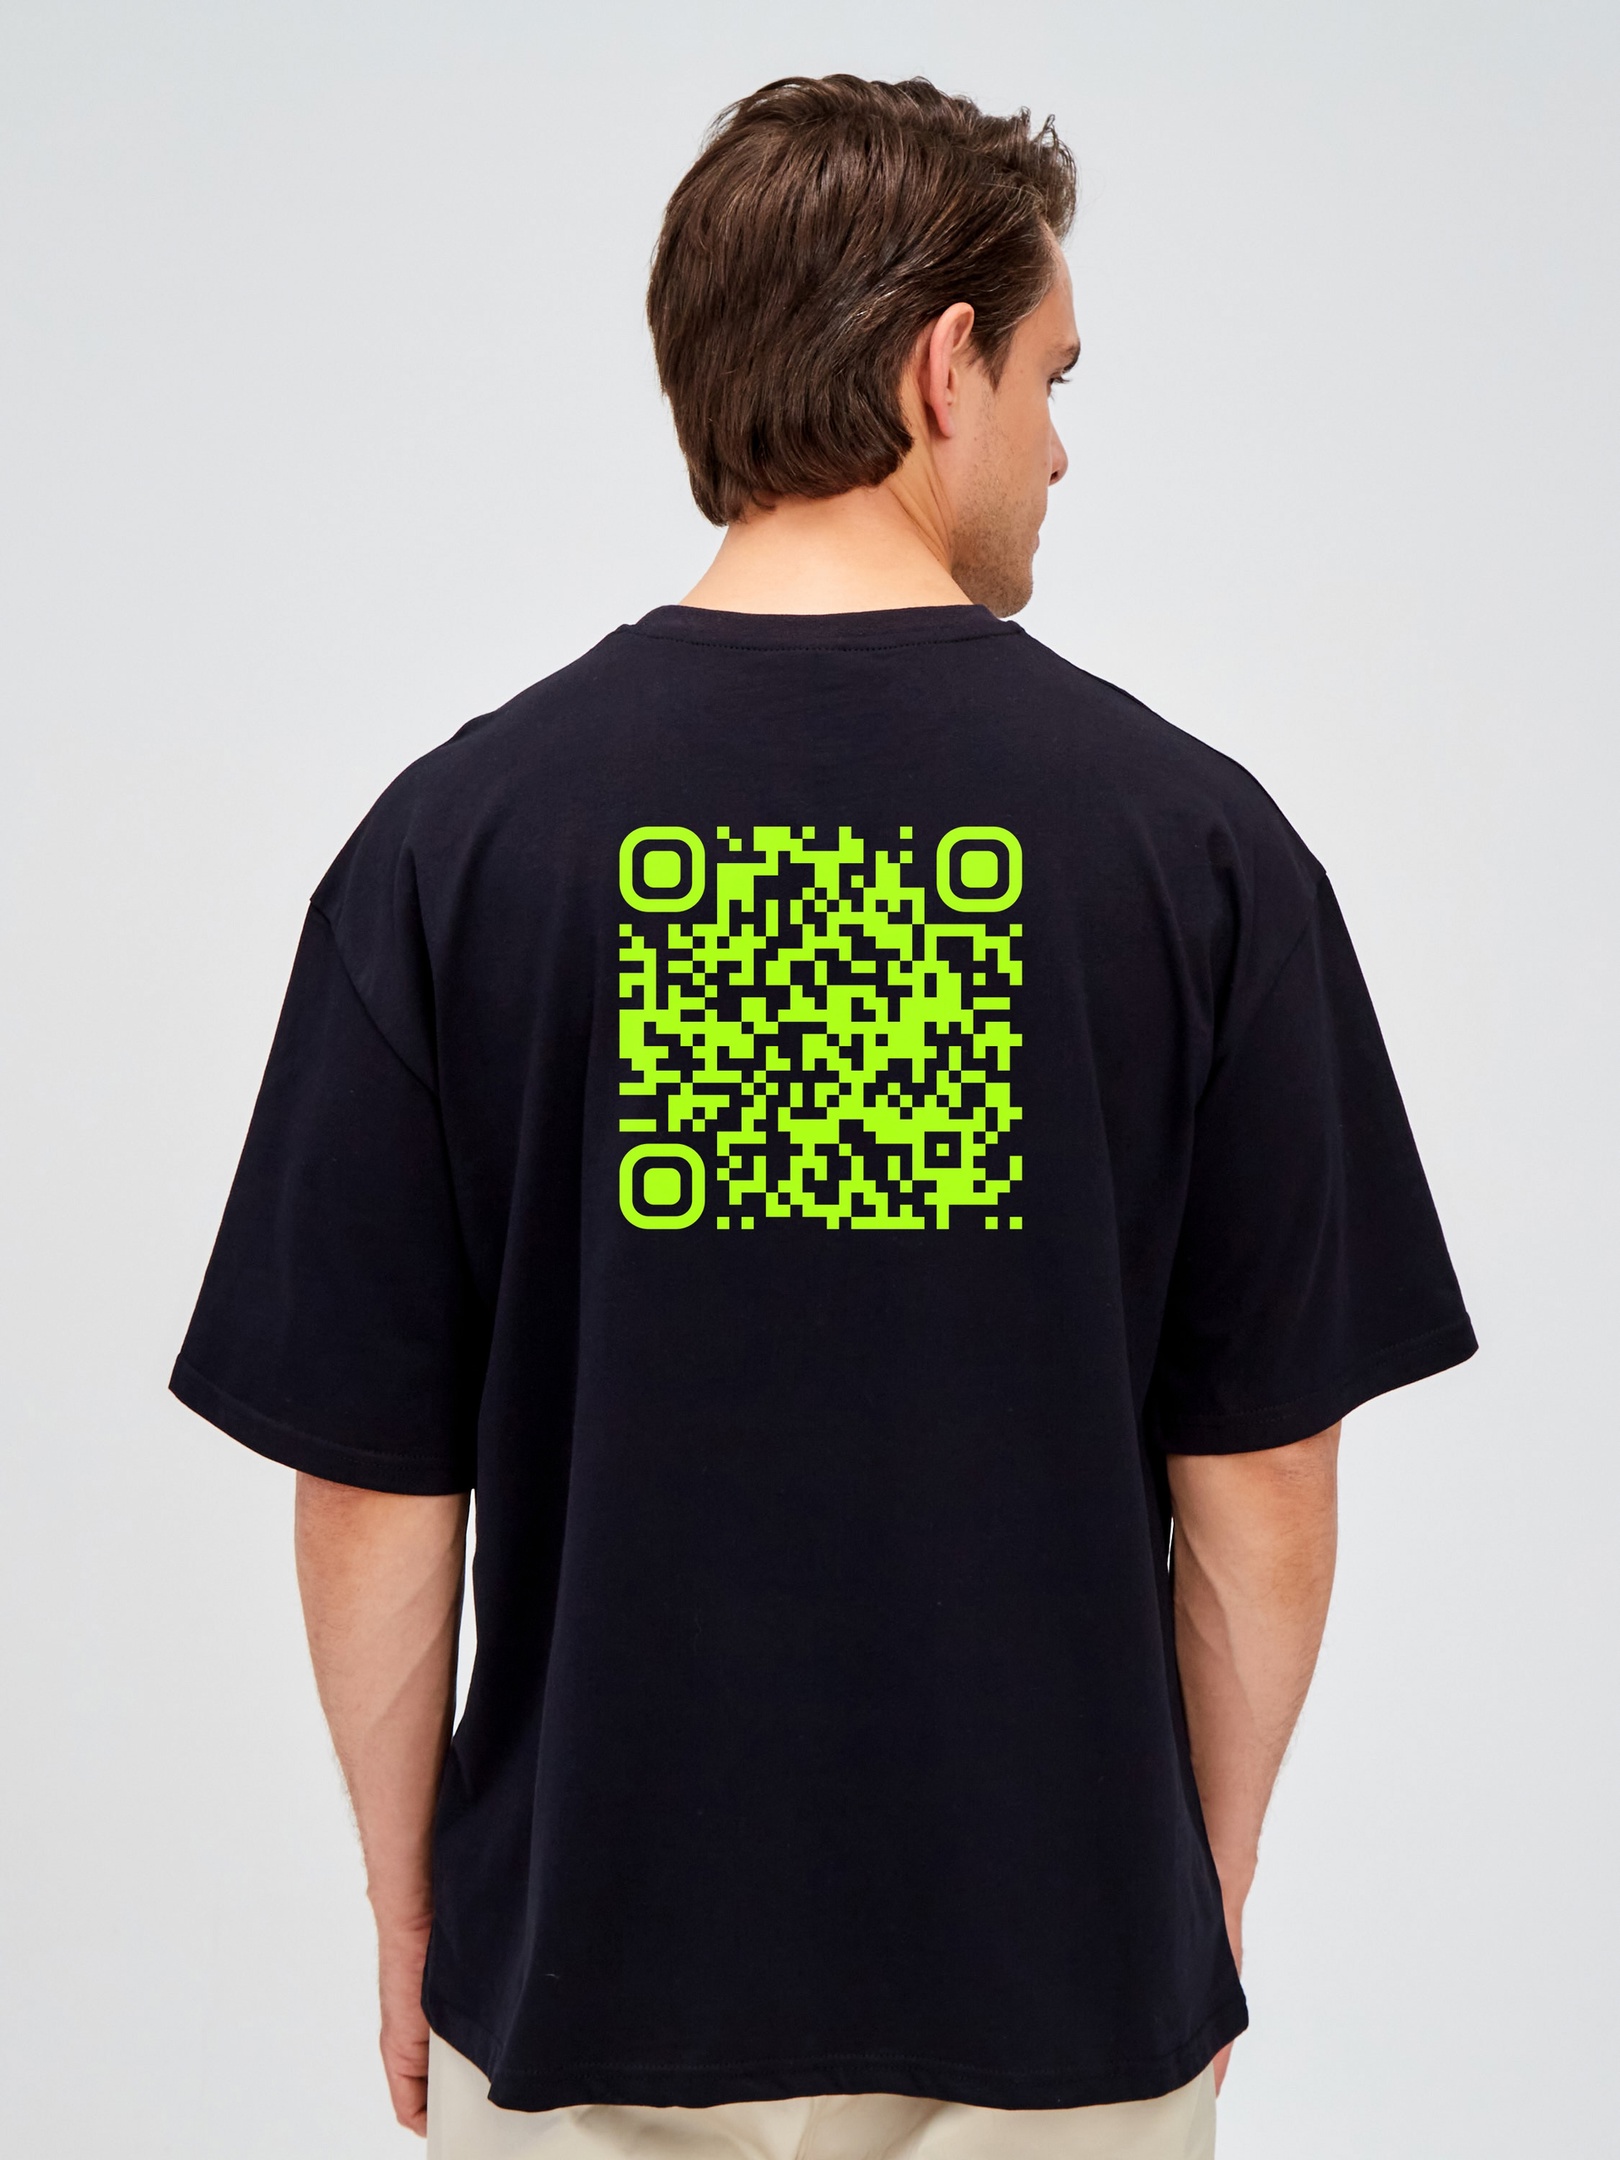 Изображение футболки с qr-кодом